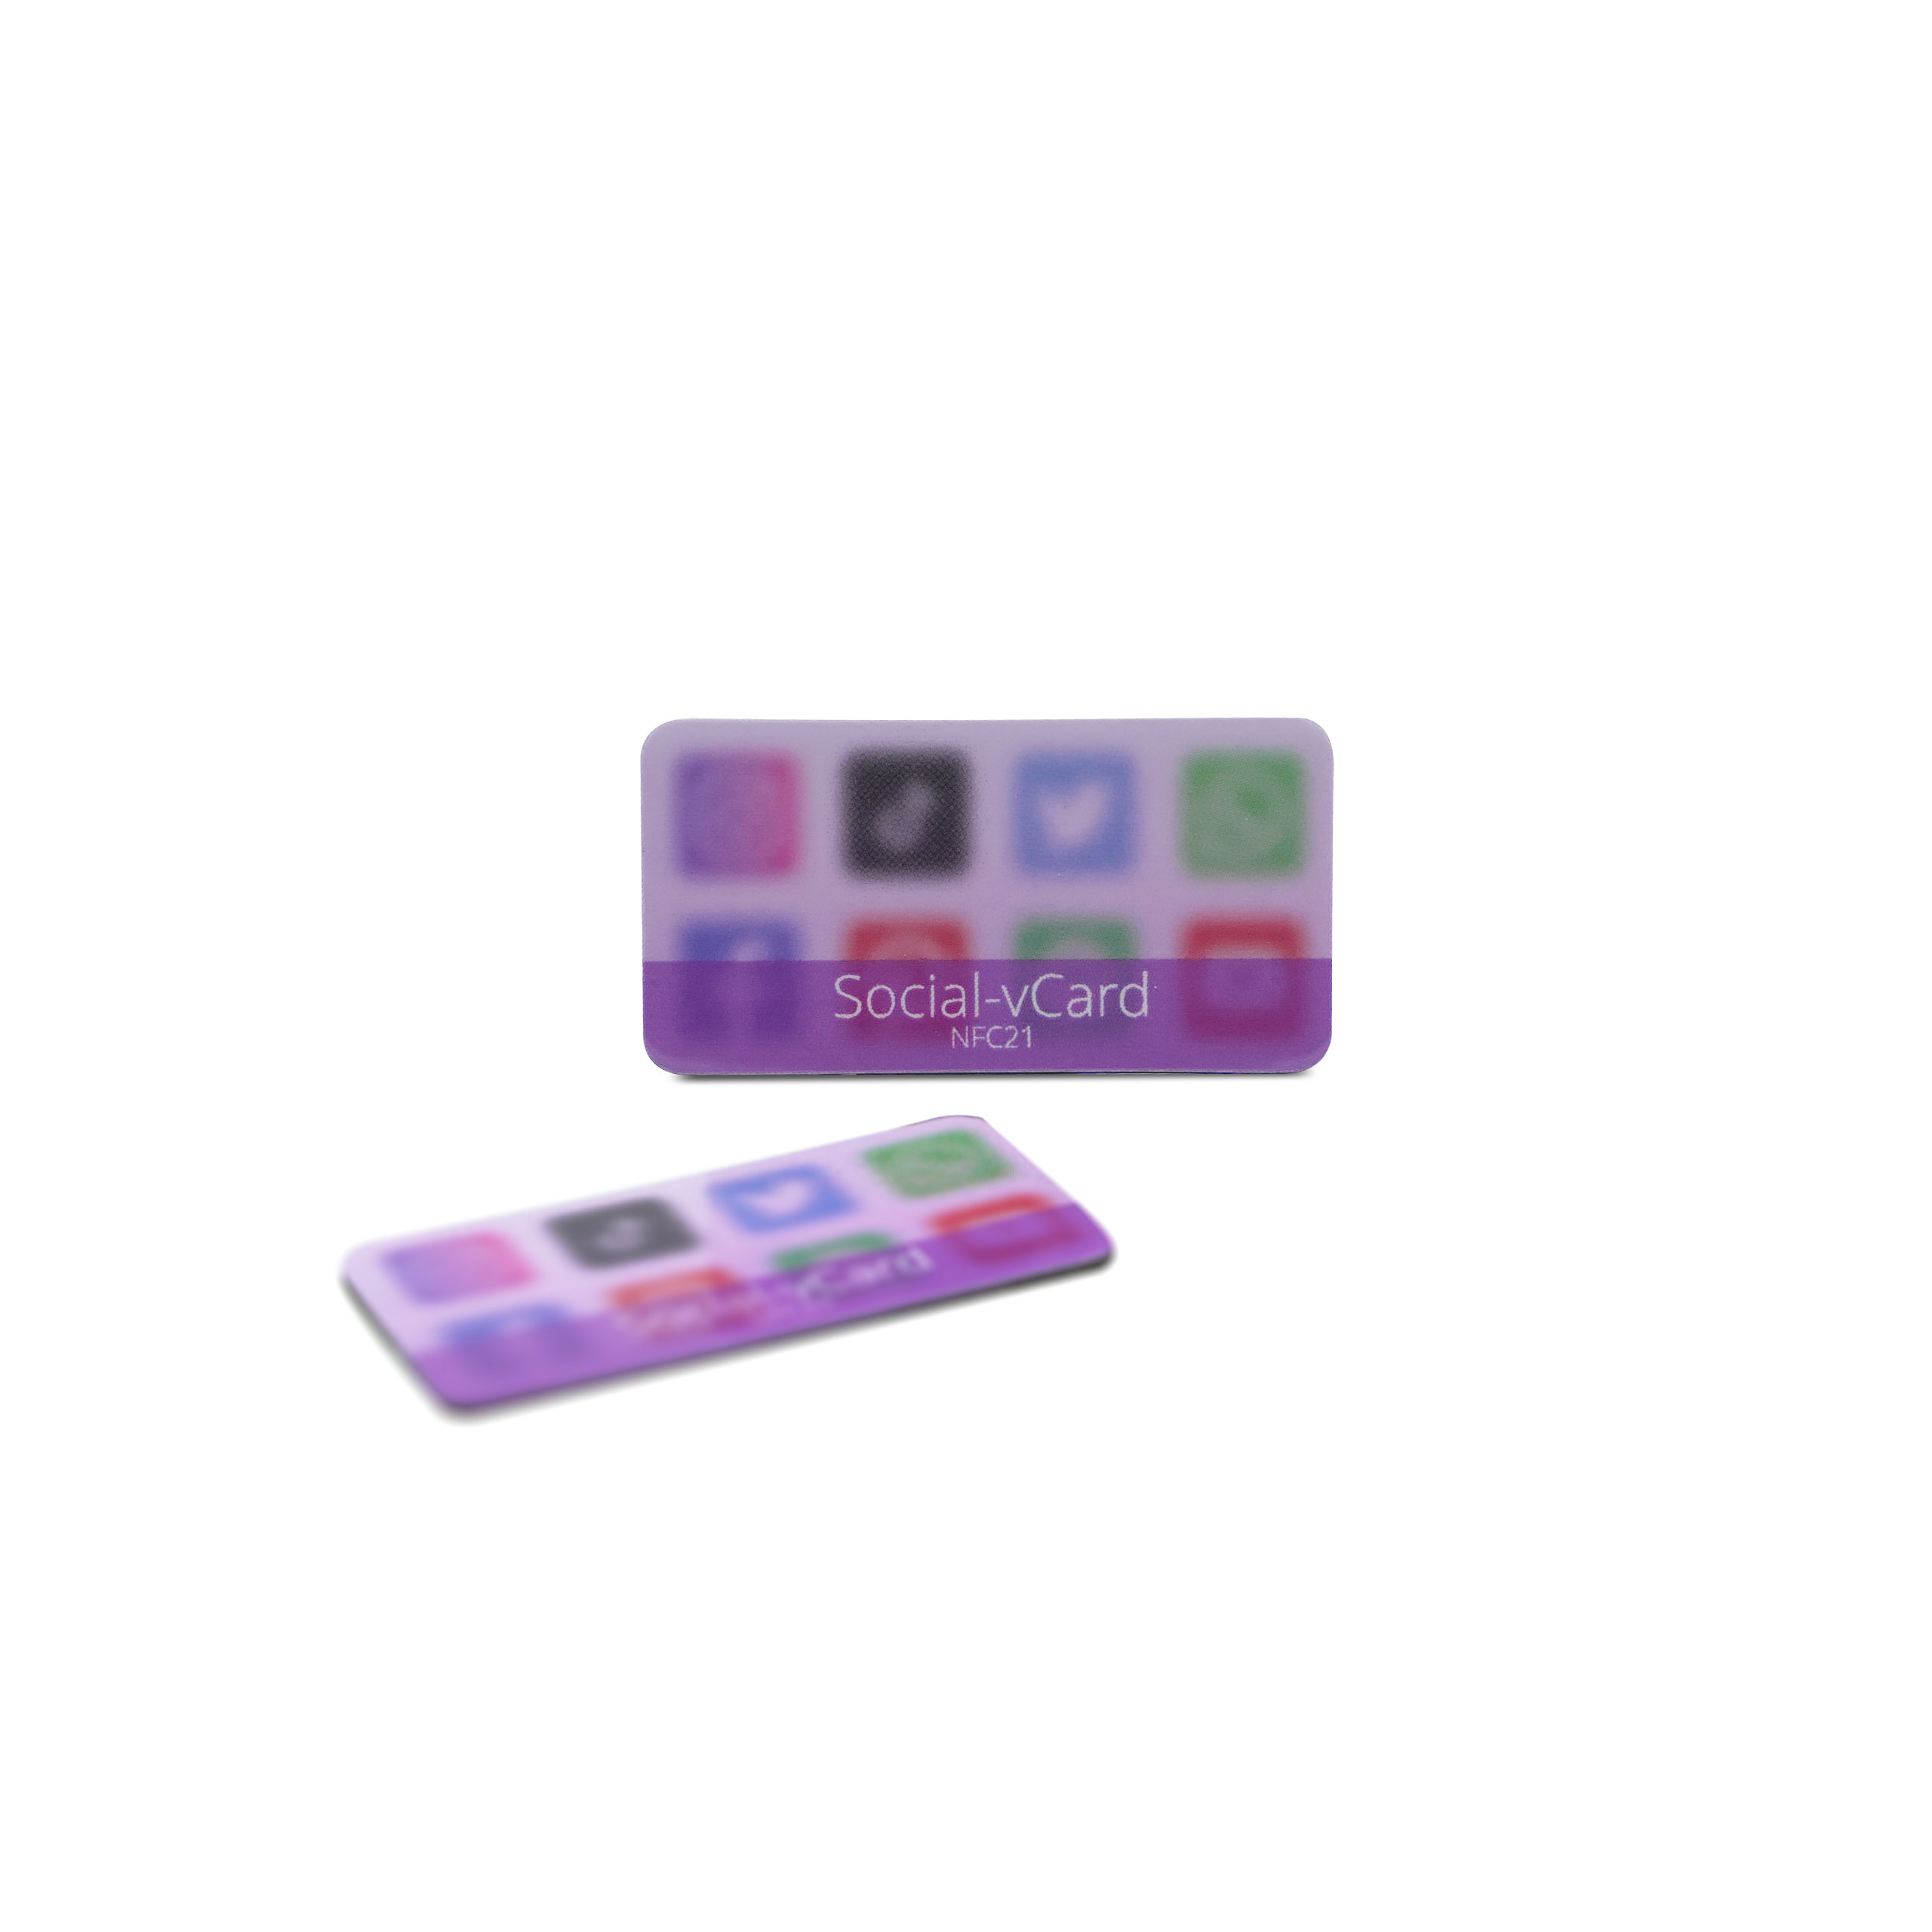 Social-vCard Glow - Digitaler Social Media Sticker - PET - 35 x 18 mm - pink